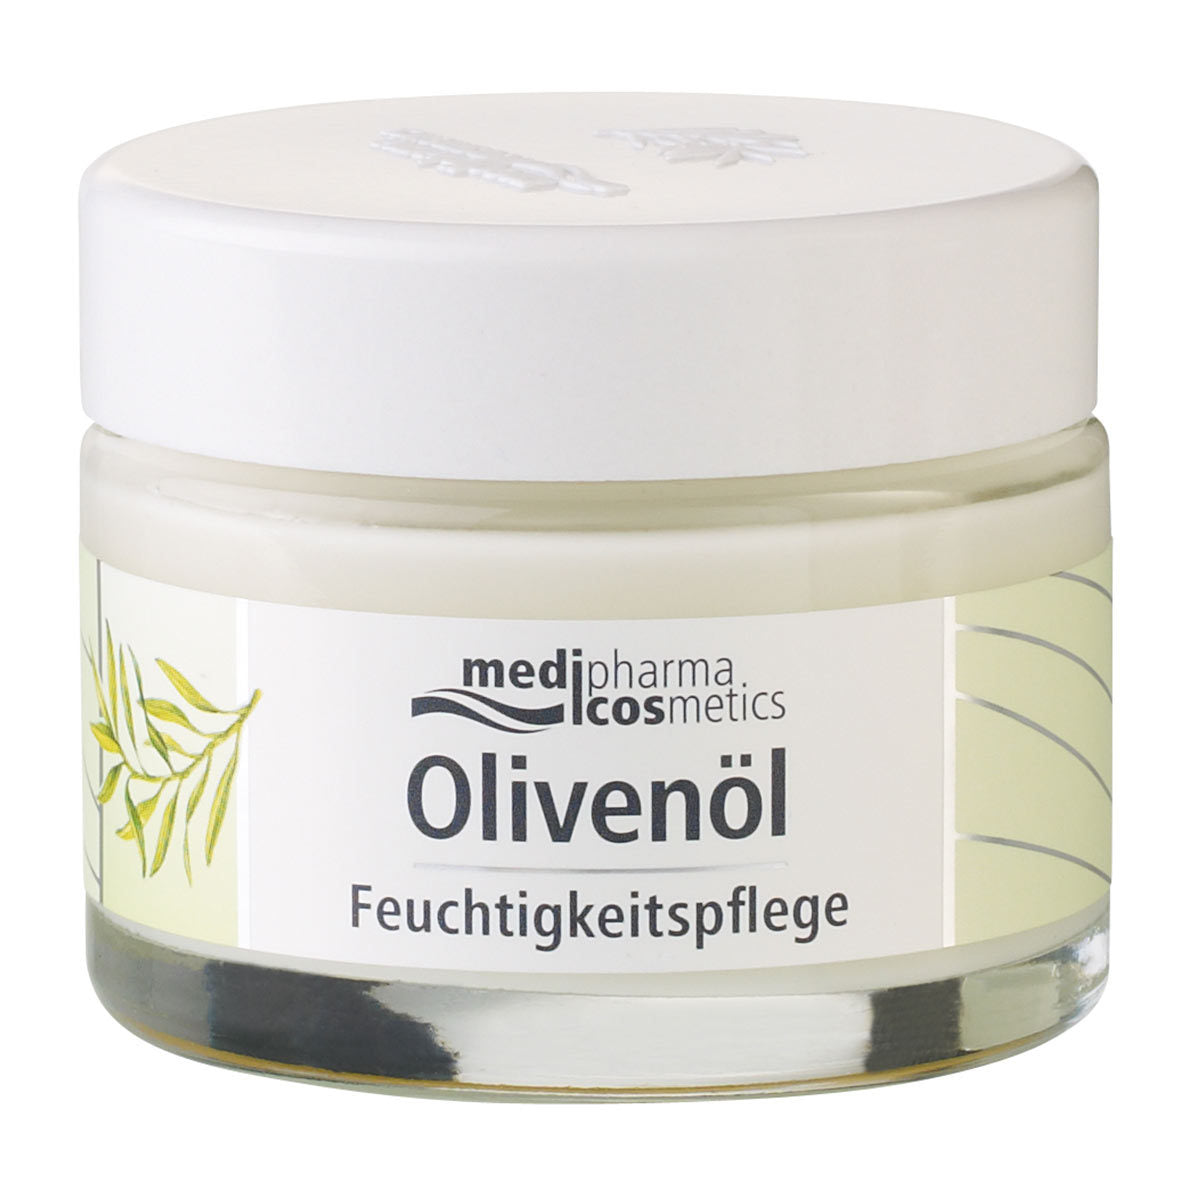 Primary image of Olivenol Feuchtigkeitspflege